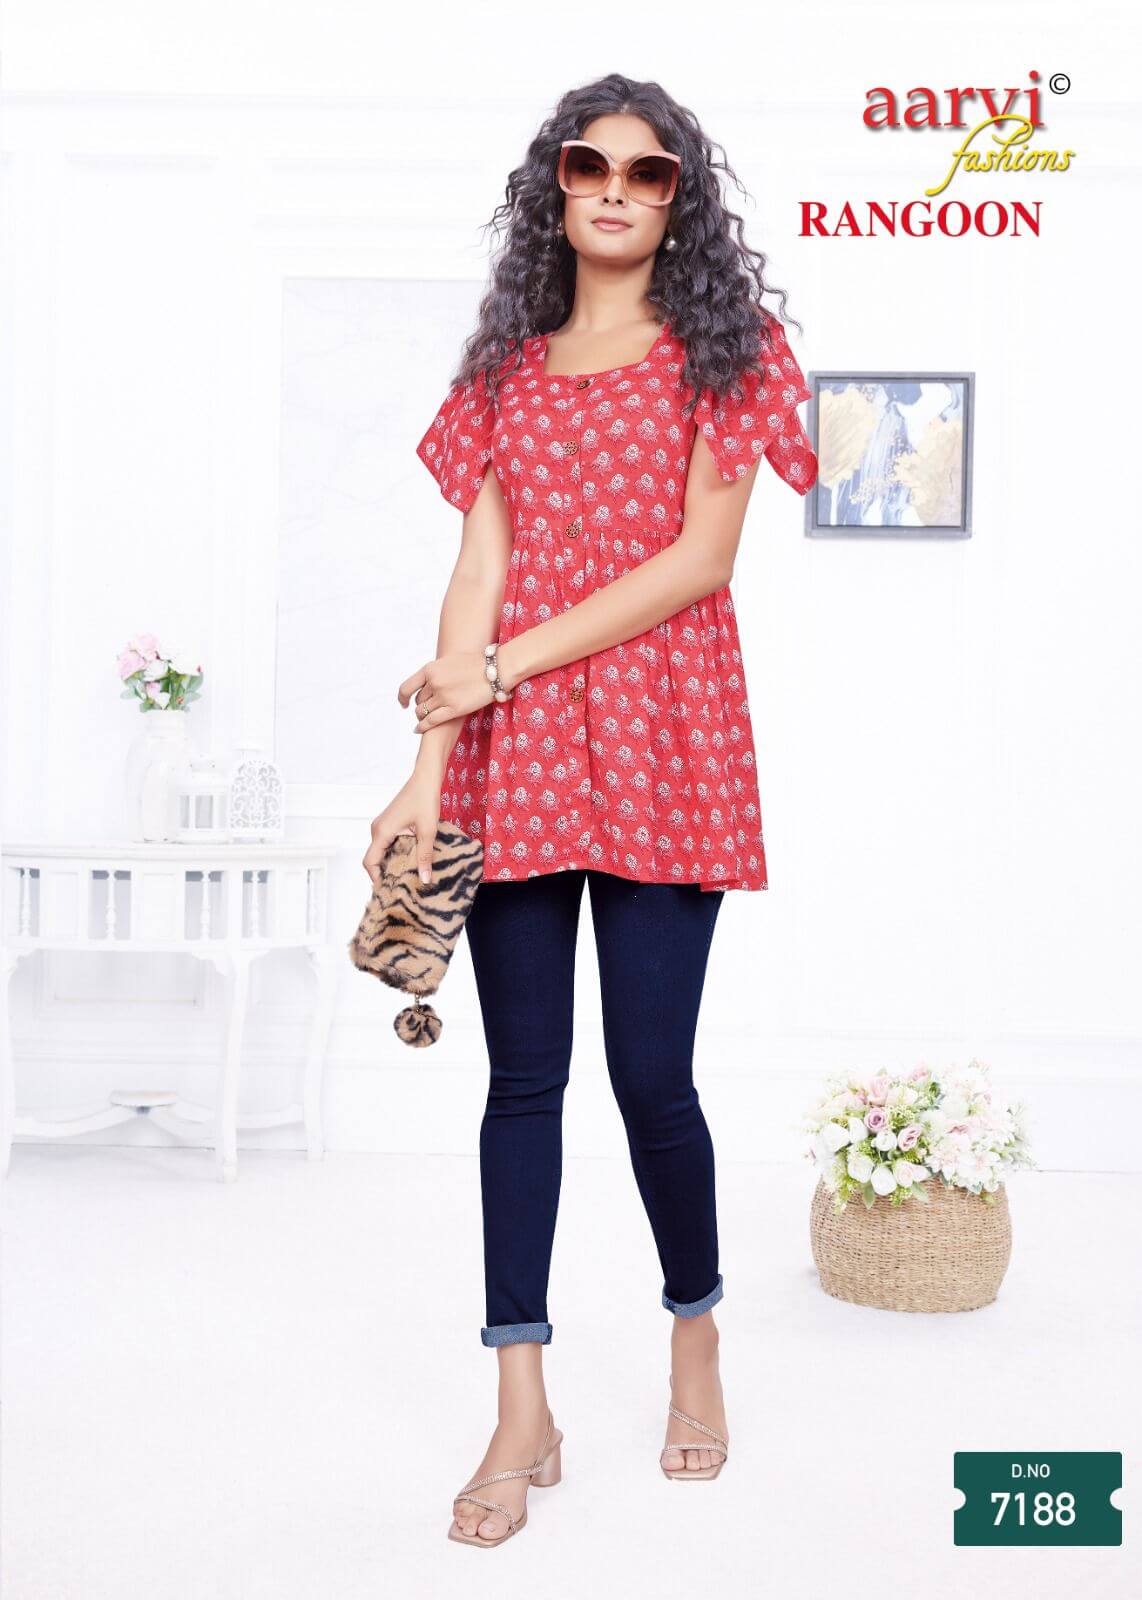 Aarvi Fashions Rangoon Ladies Short Tops Catalog collection 6